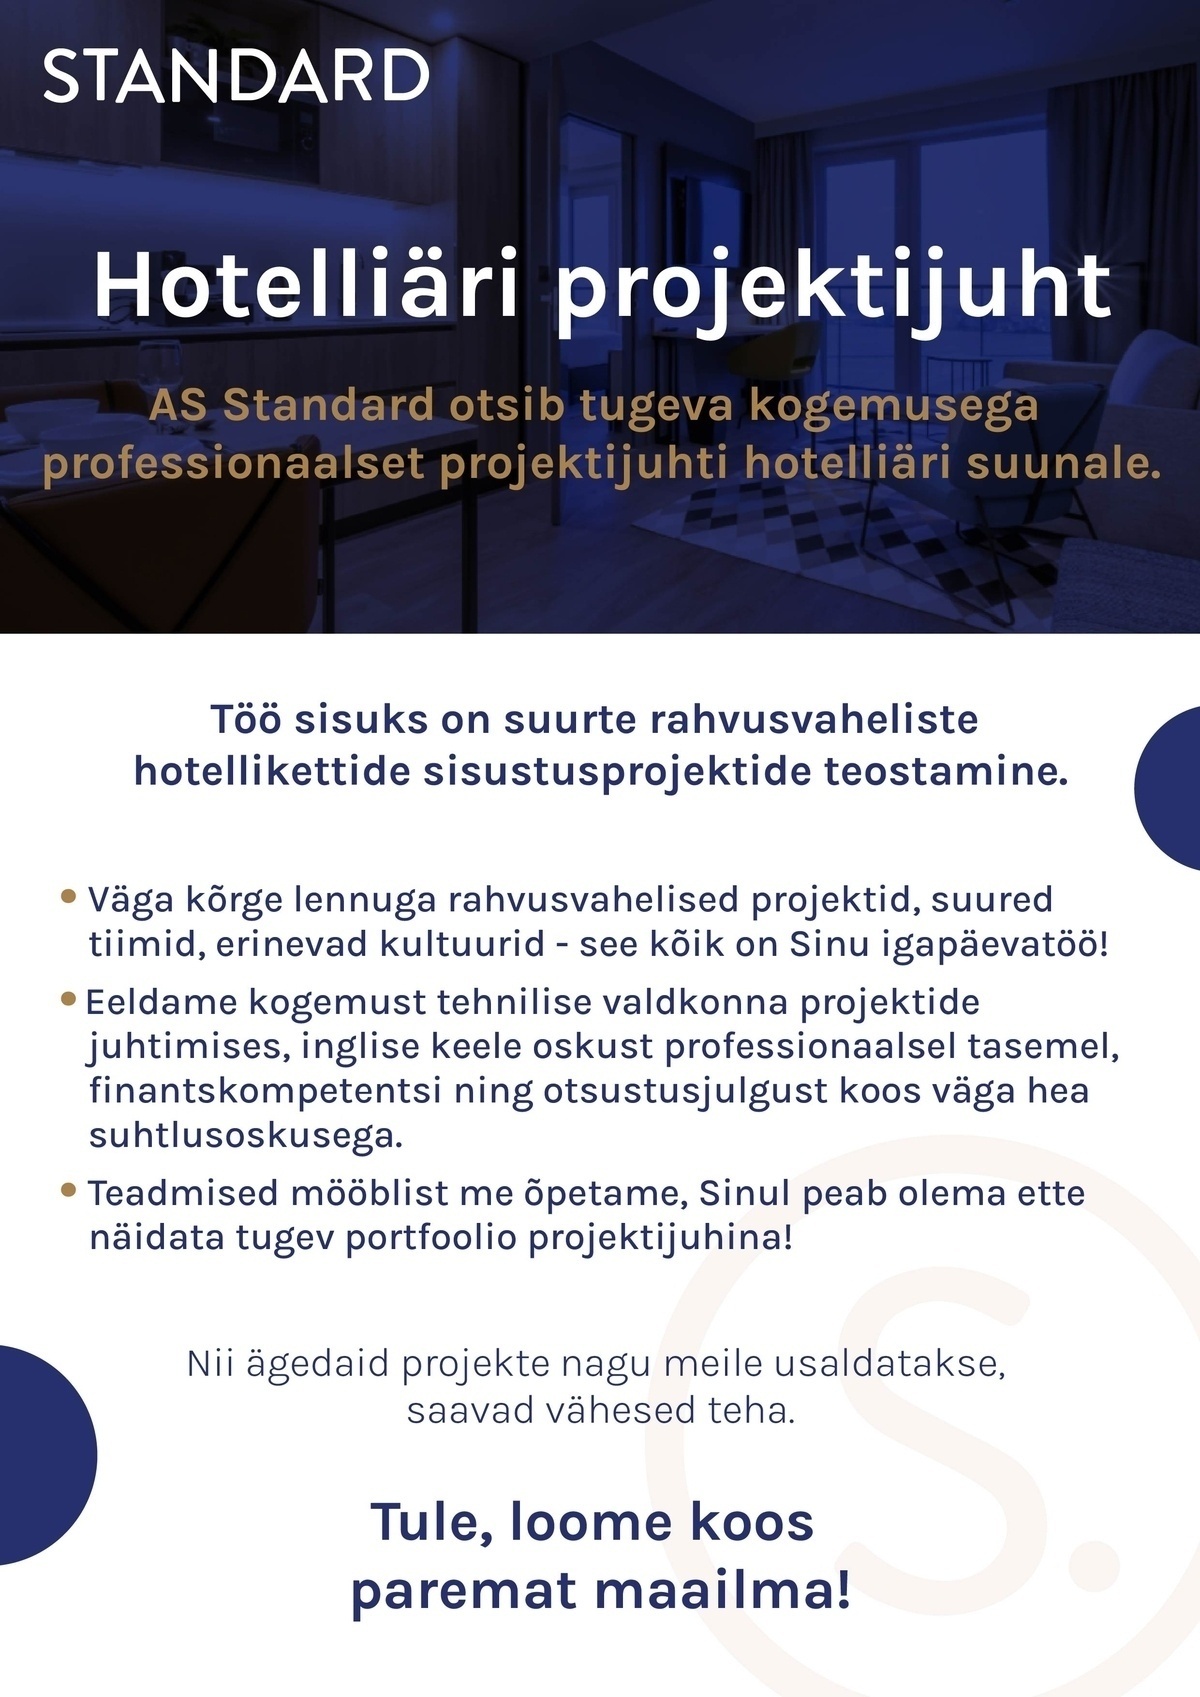 AS Standard Hotelliäri projektijuht